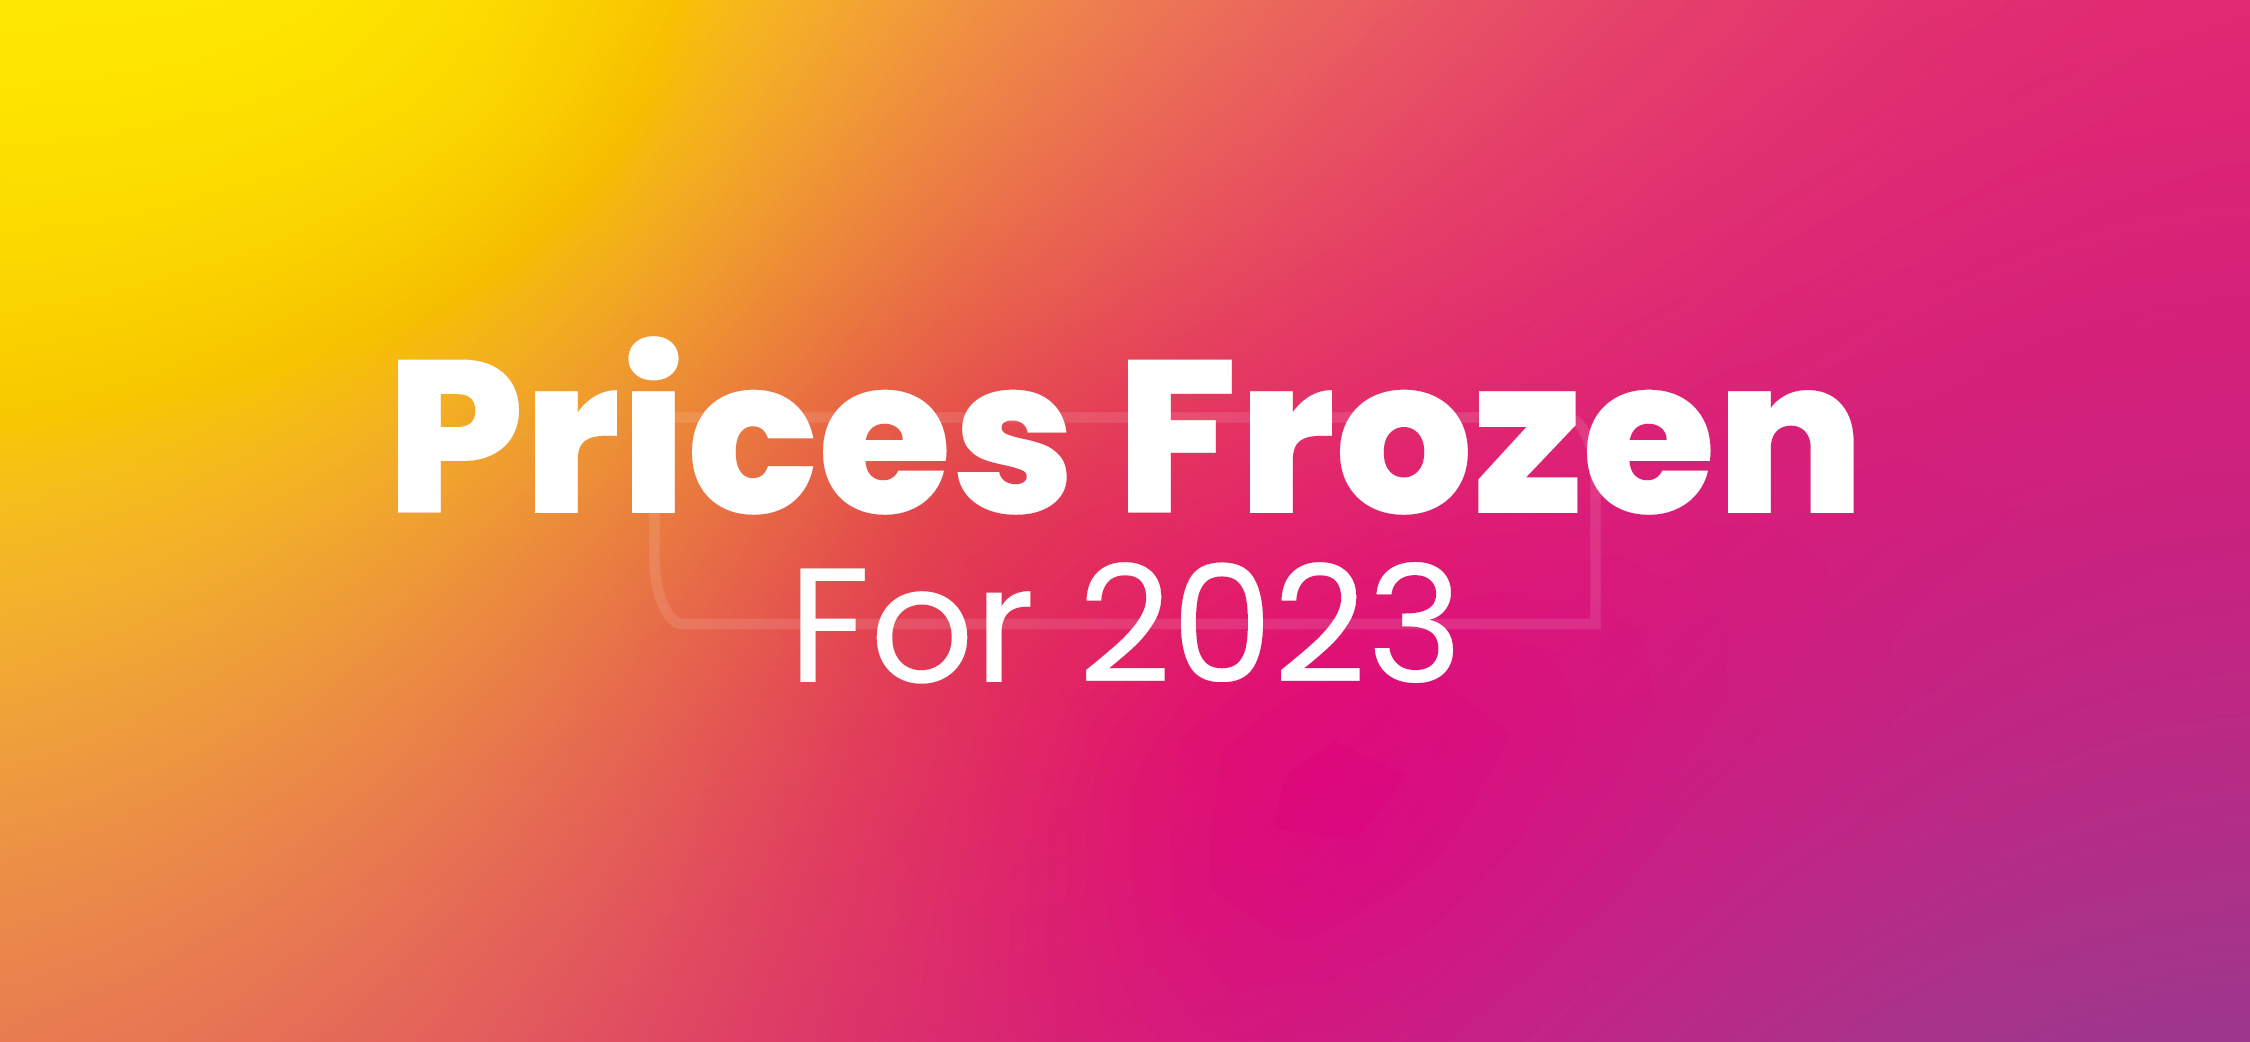 Prices-freeze-header